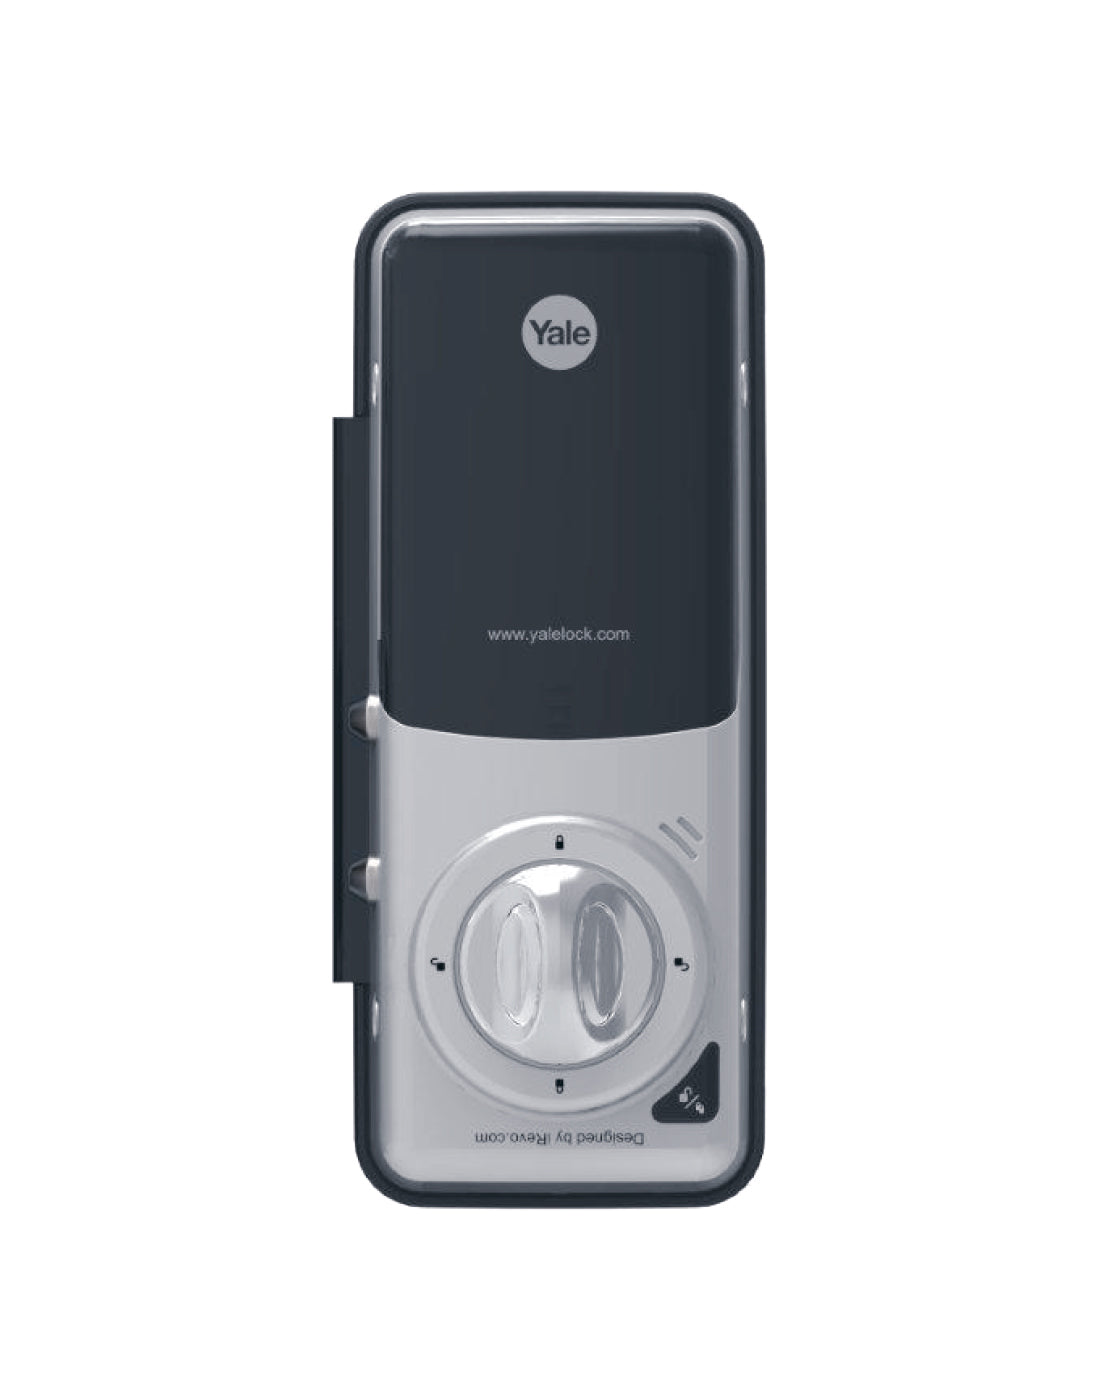 YDG 413 GL Biometric Smart Glass Door Lock, Mirror Finish